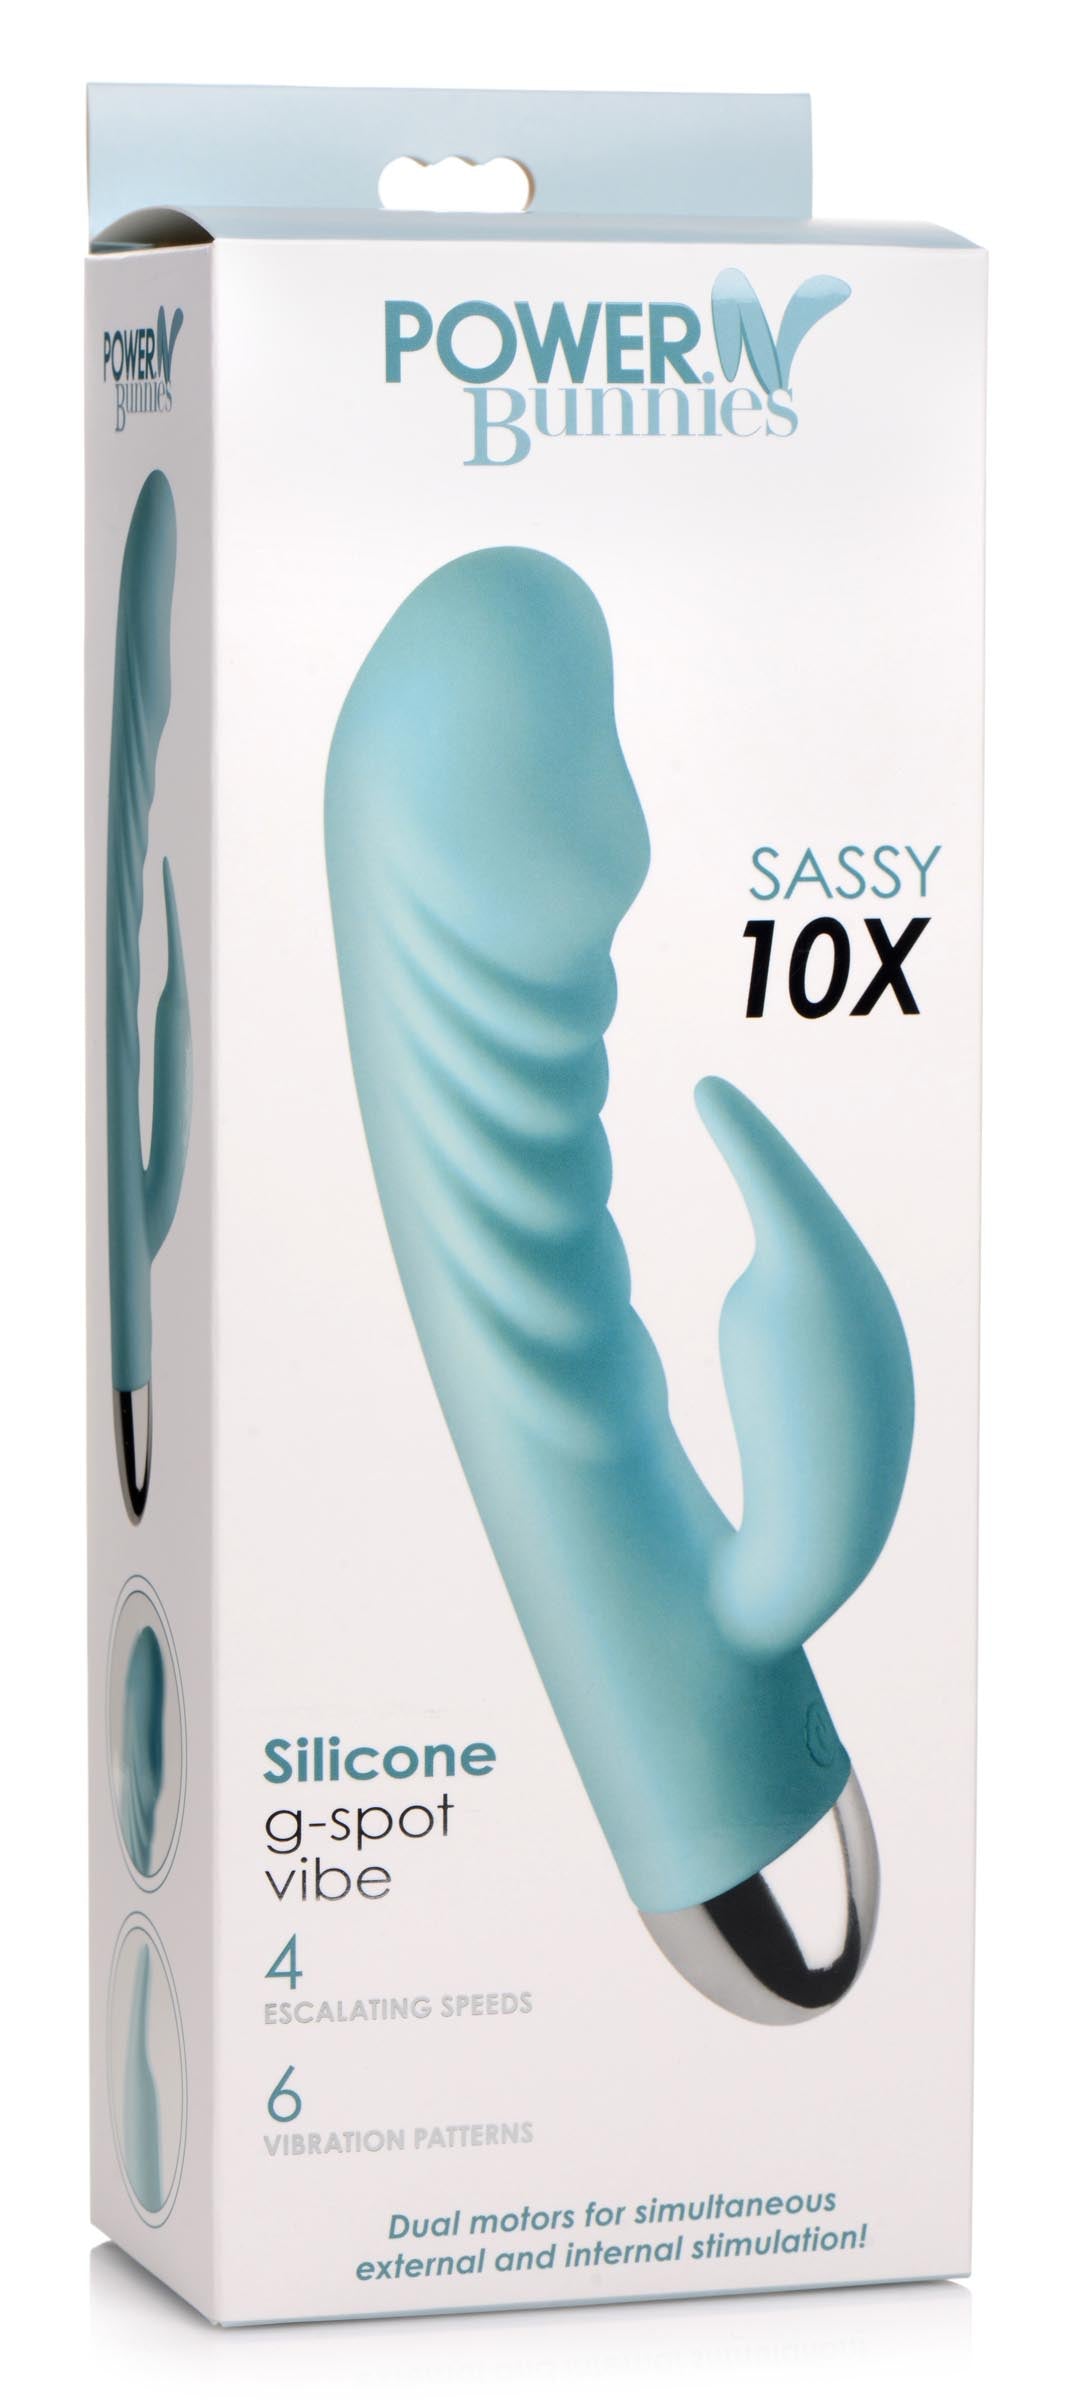 Sassy 10X Silicone G-Spot Vibrator